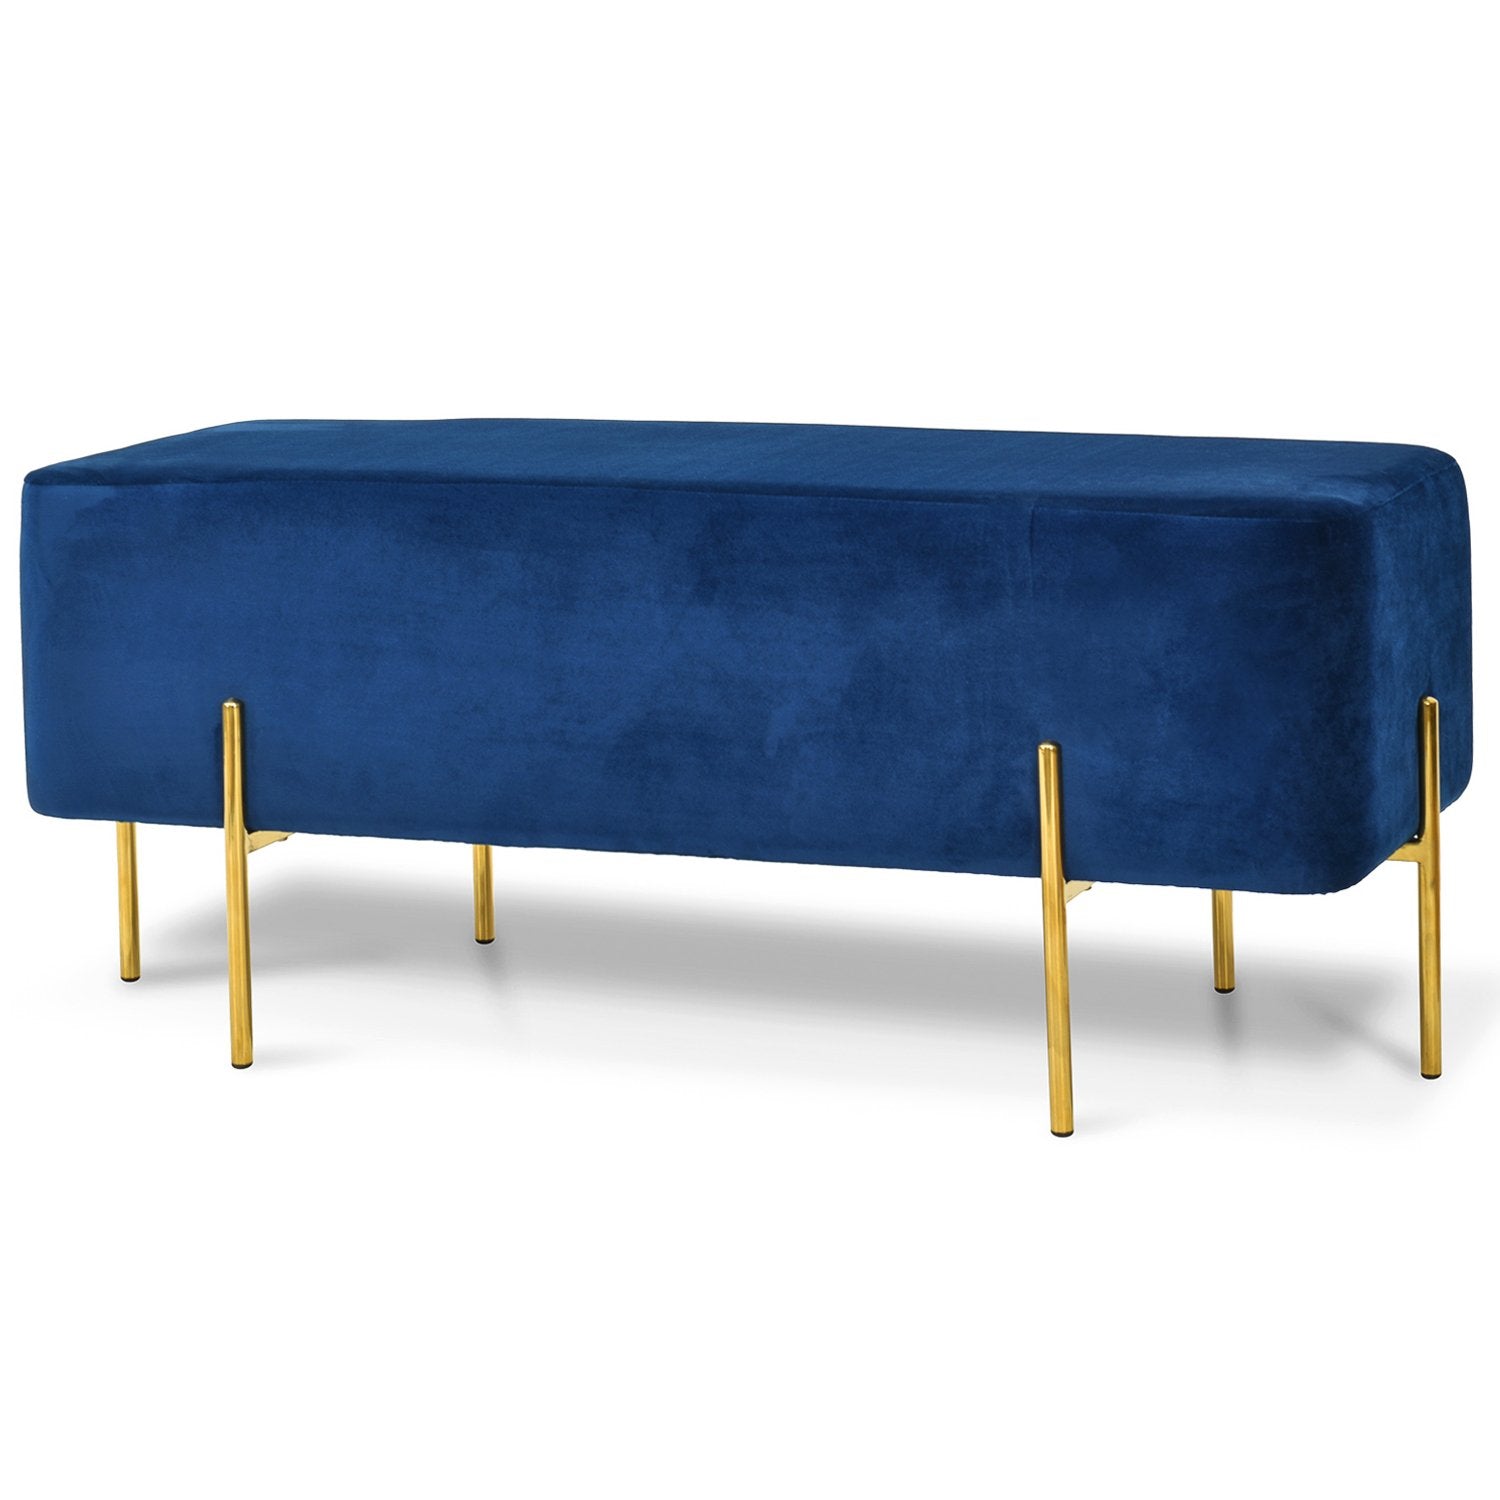 Lila Ottoman - Blue Velvet Seat - Ottomans